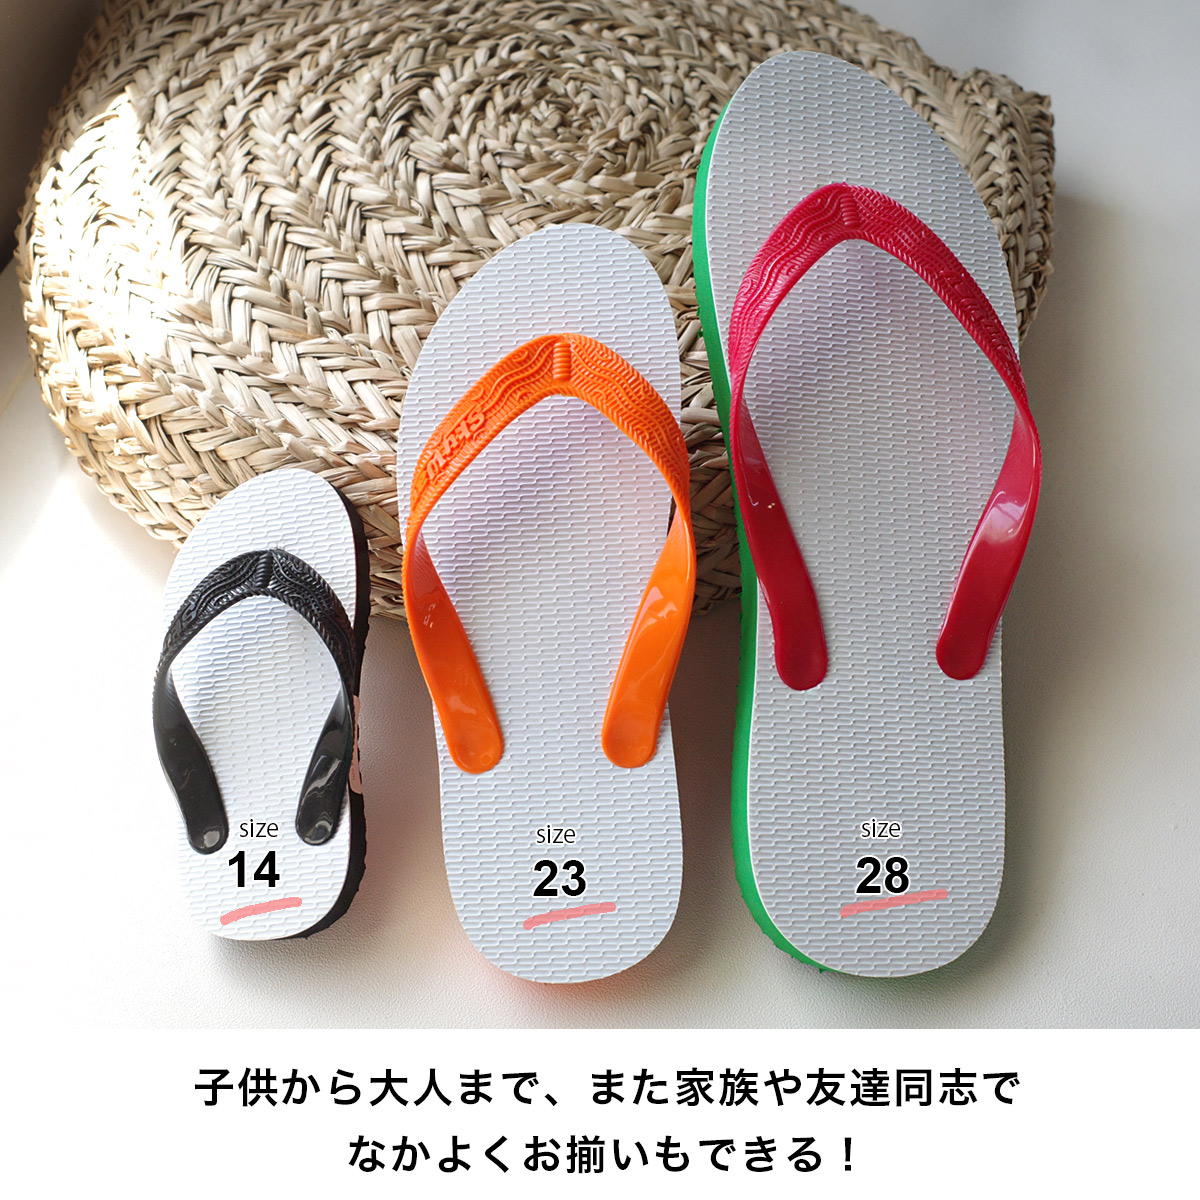  sandals island ... beach sandals tongs sandals Okinawa .....